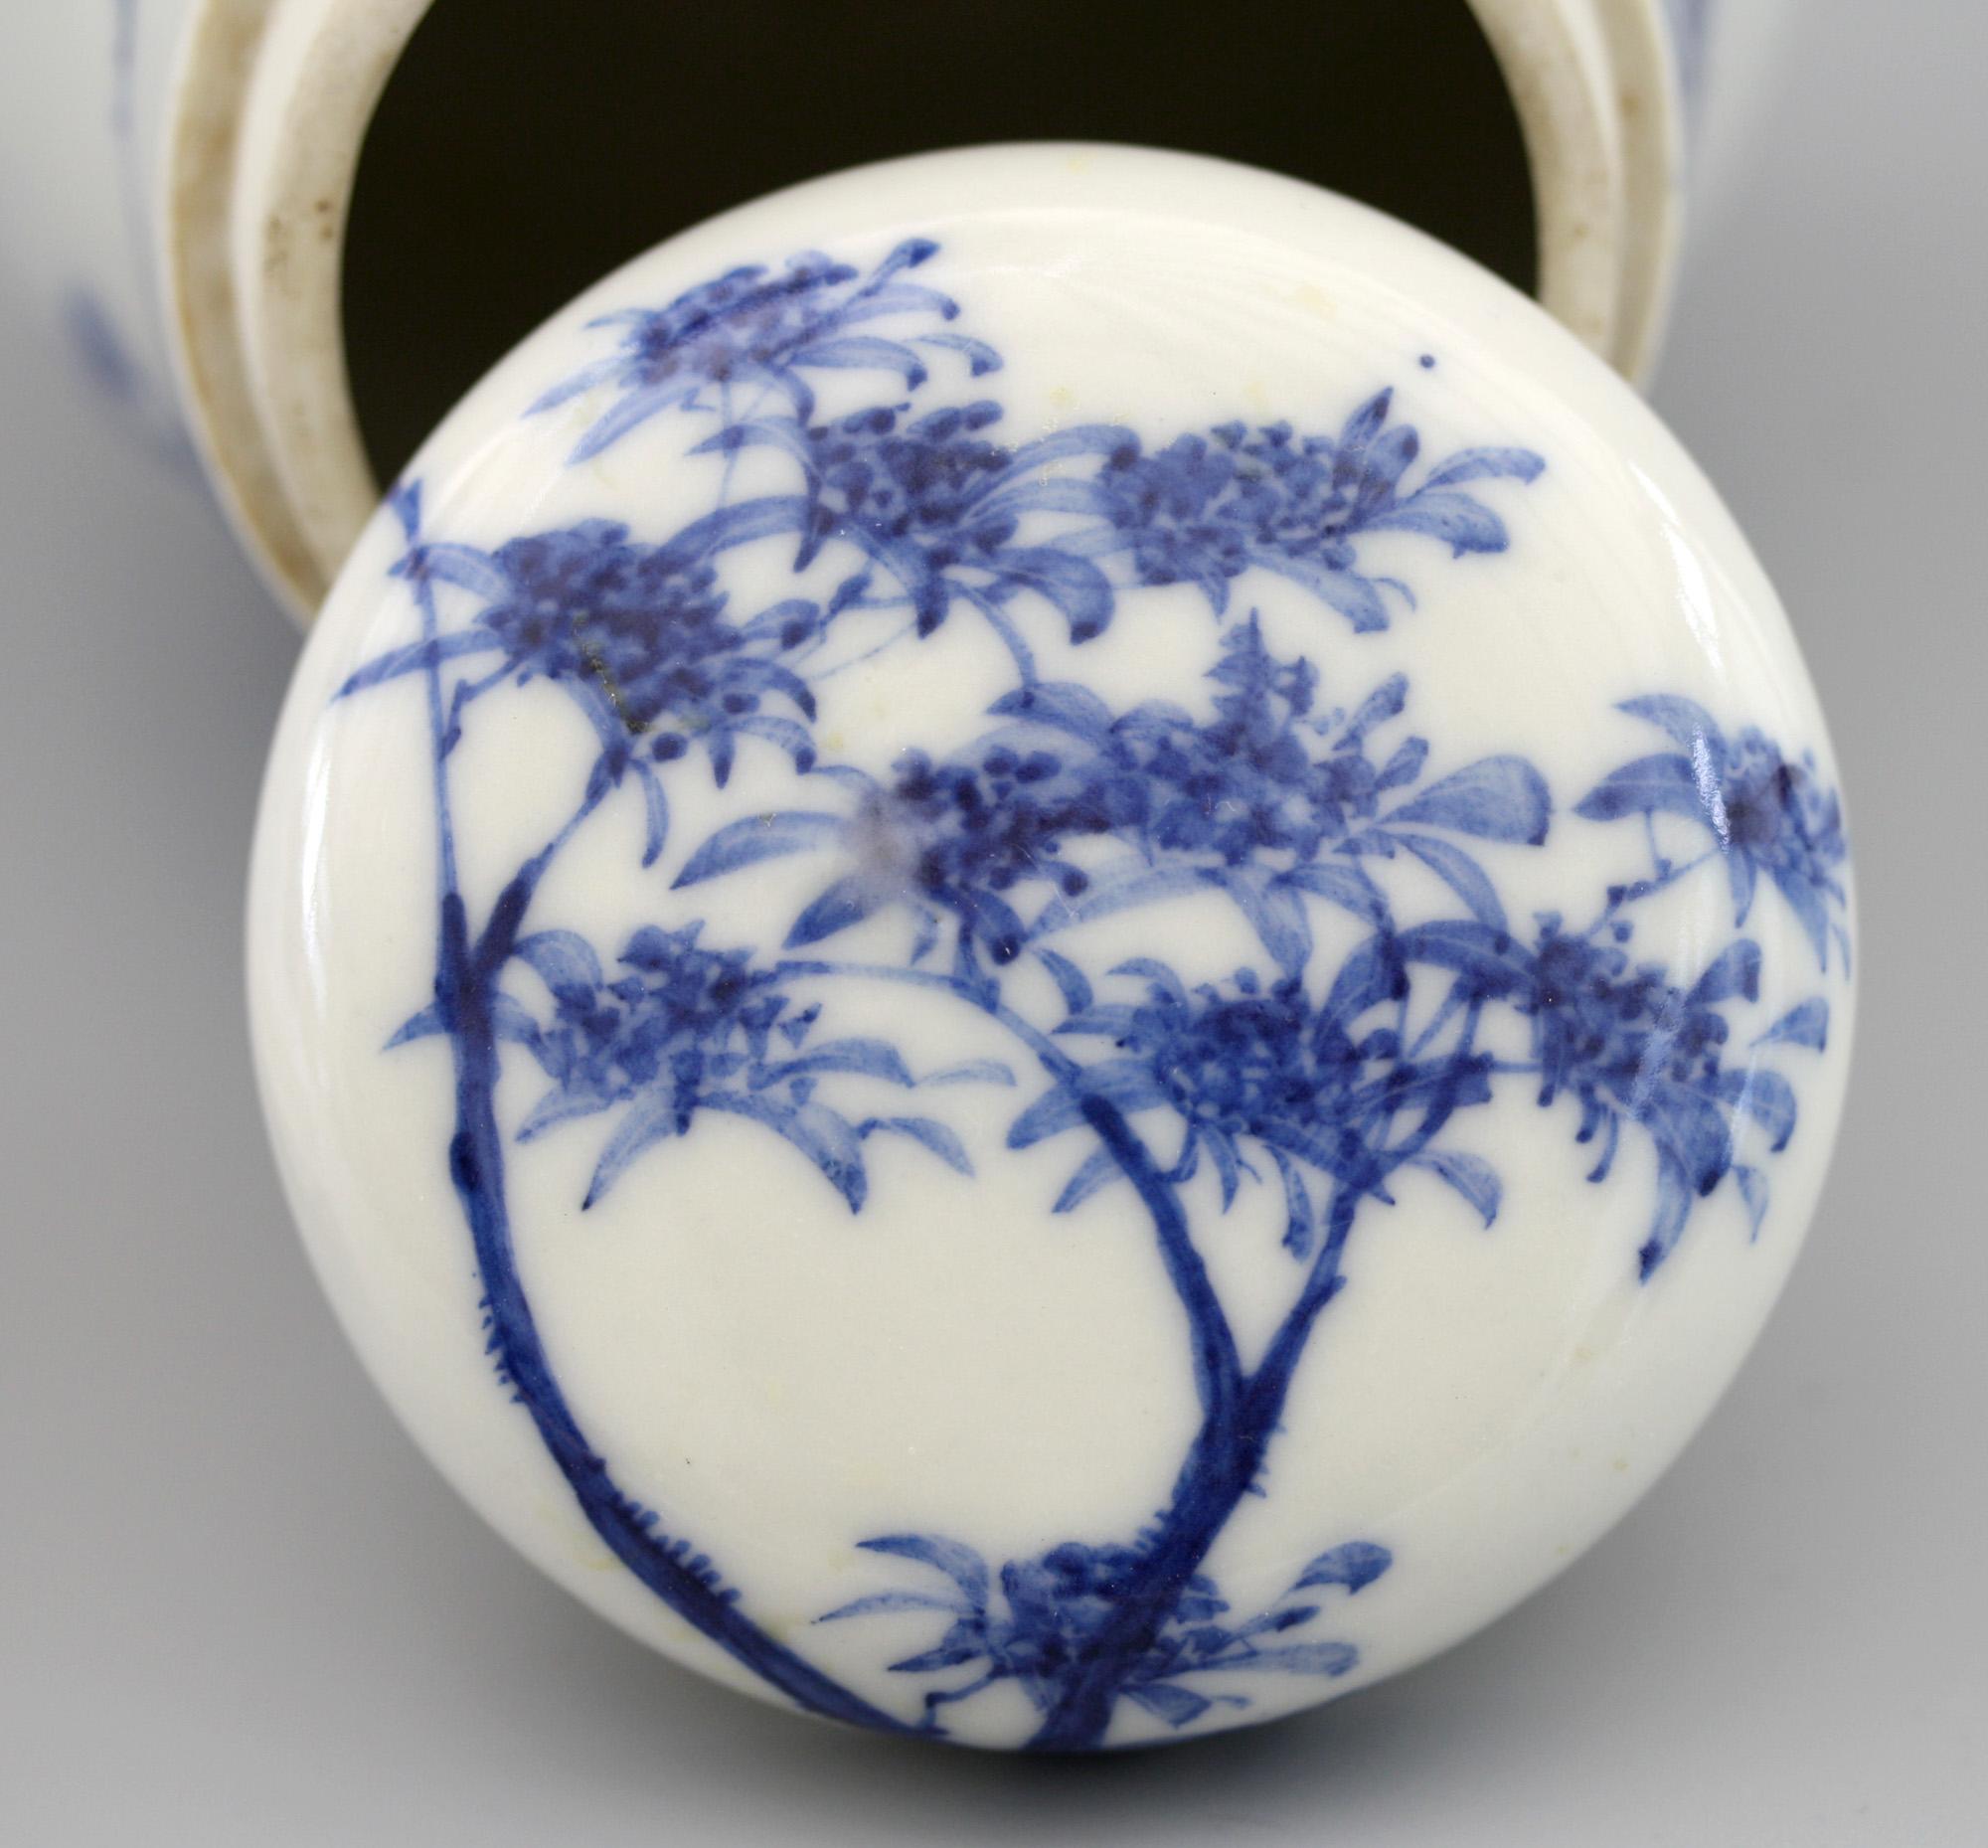 20th Century Japanese Arita Blue and White Landscape Porcelain Lidded Tea Caddy